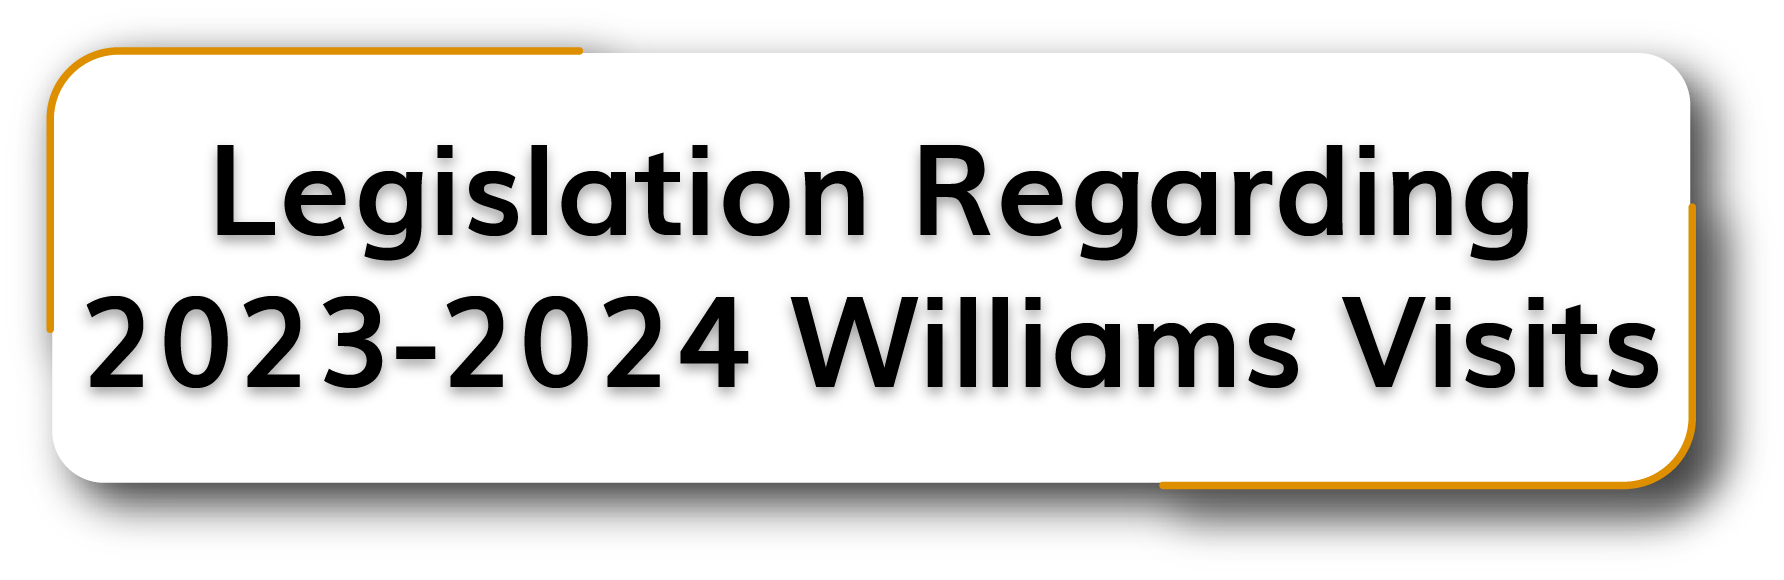 Legislation Regarding 2023-2024 Williams Visits Button